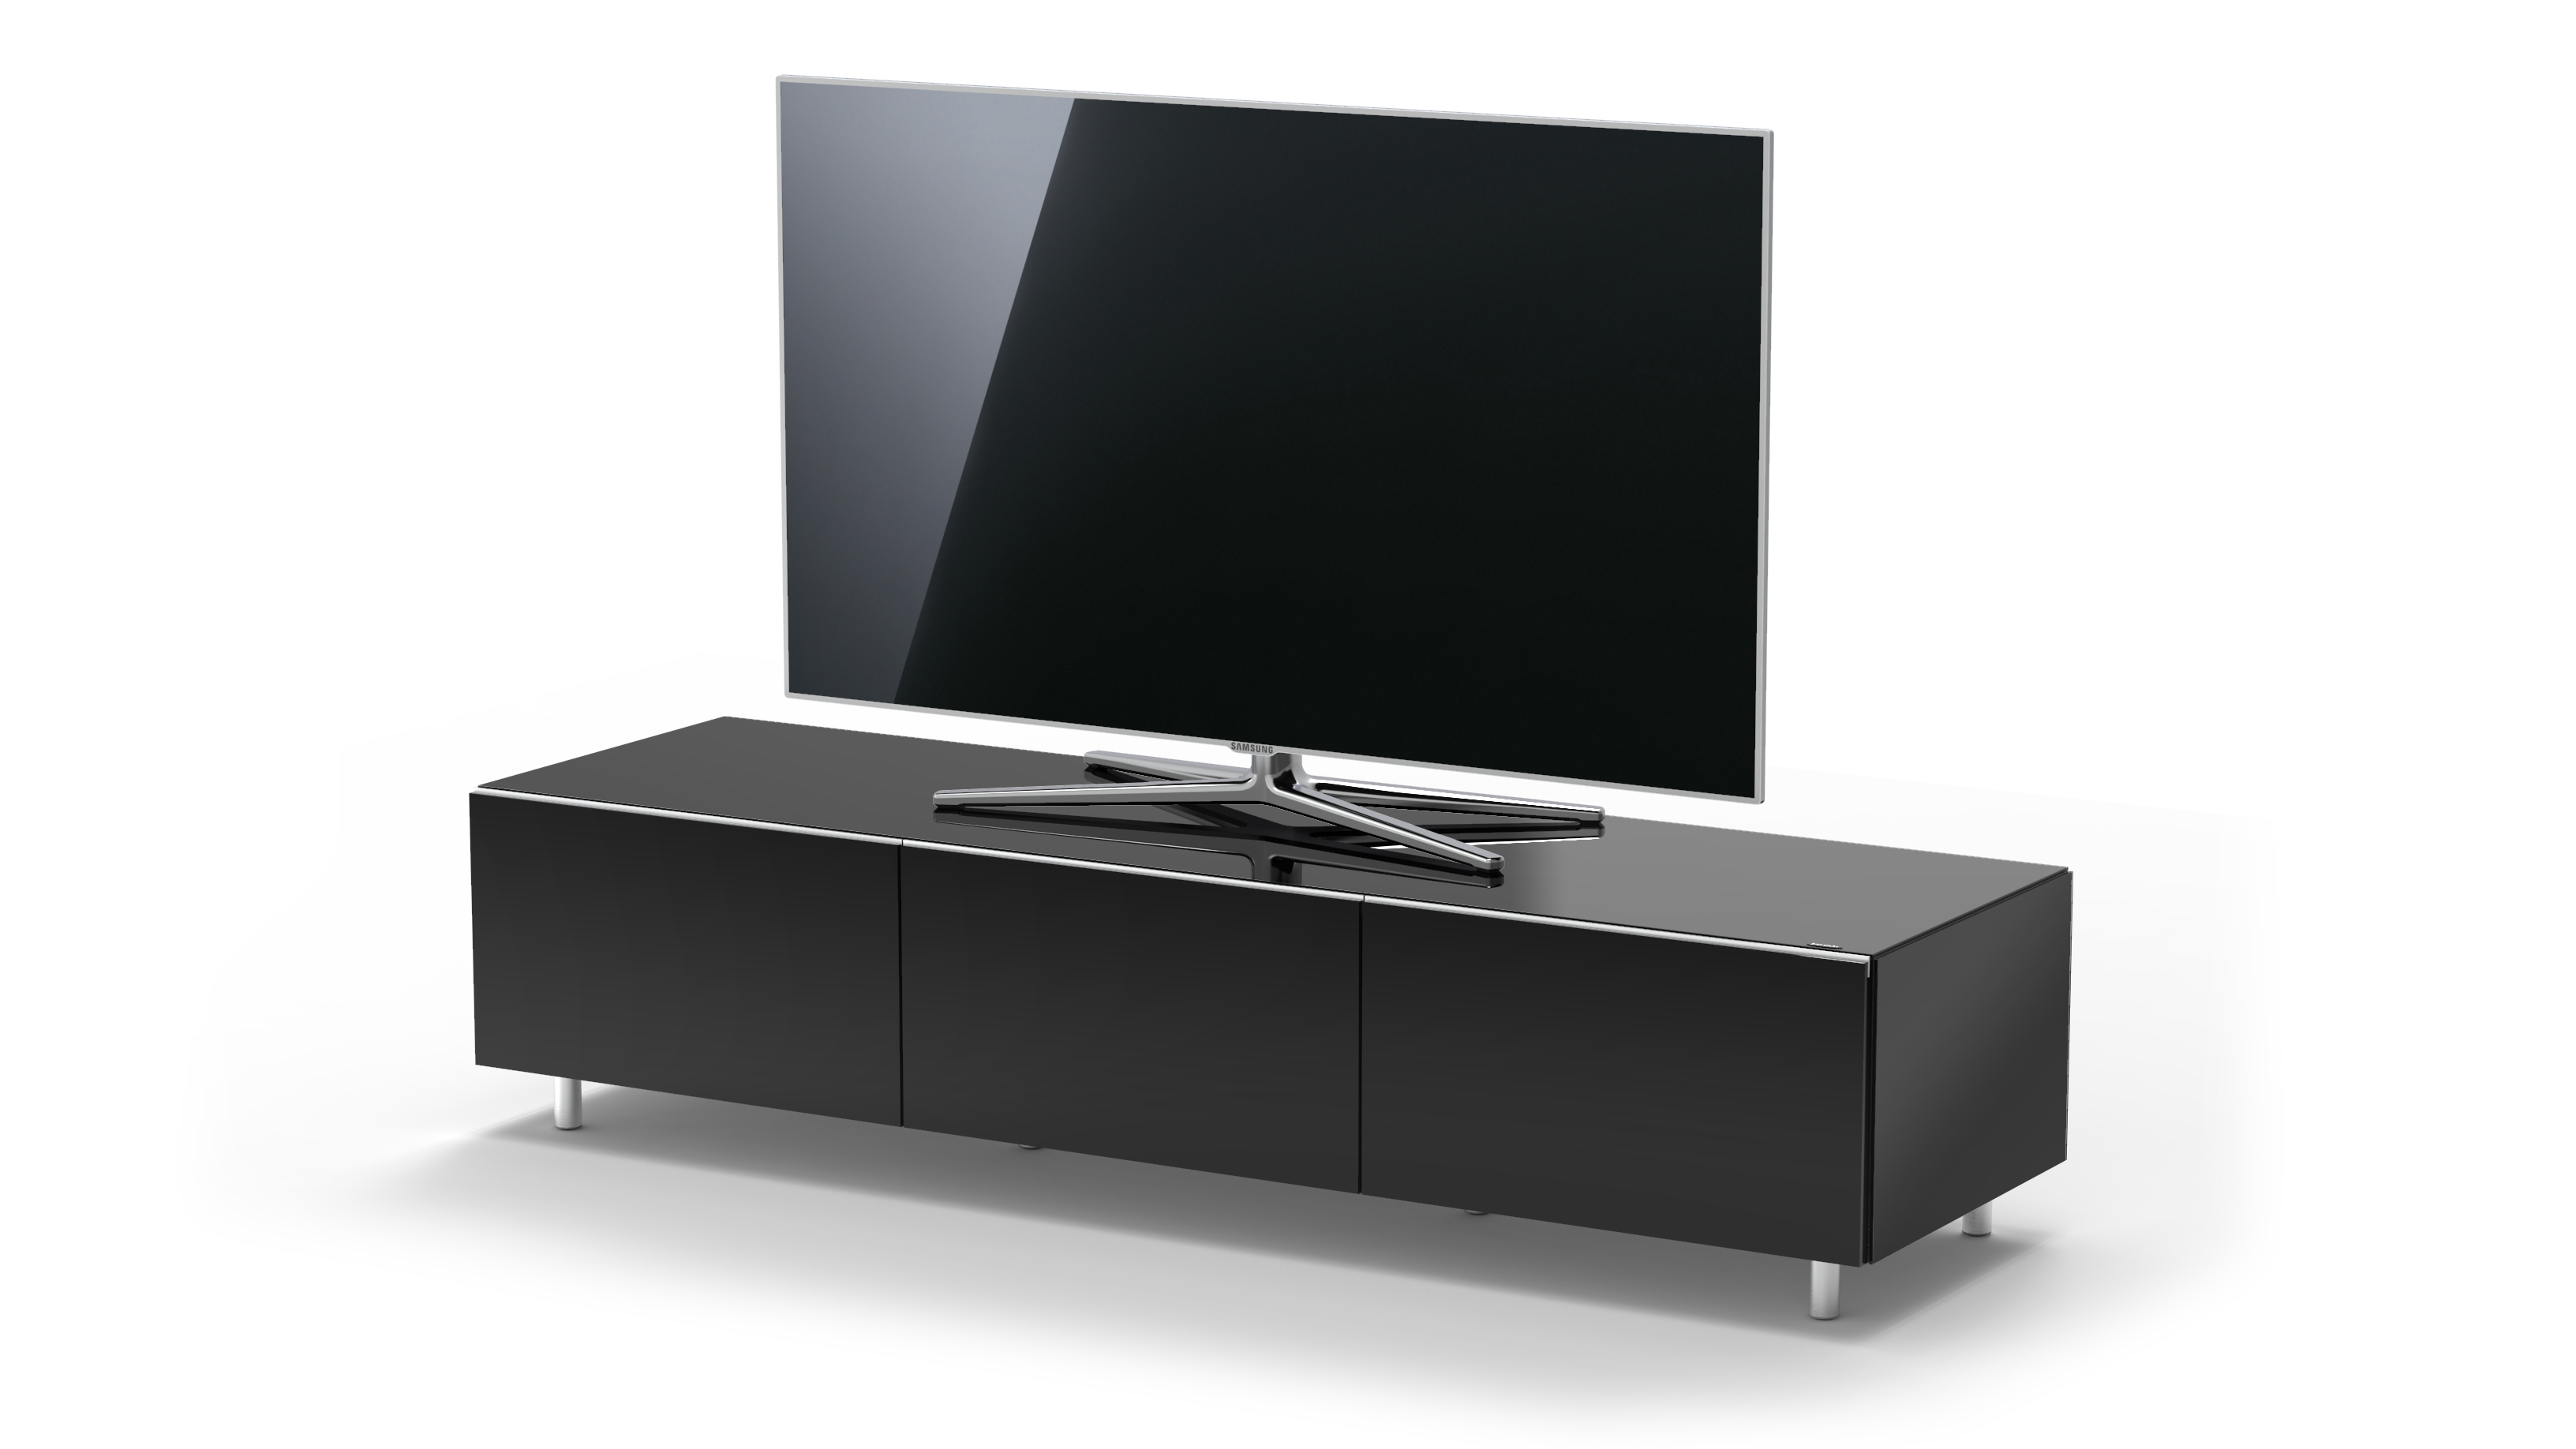 JUST BY SPECTRAL TV-Lowboard 1650T-SL. mit 165cm. TV-Lowboard JRL Breite Black. Schublade